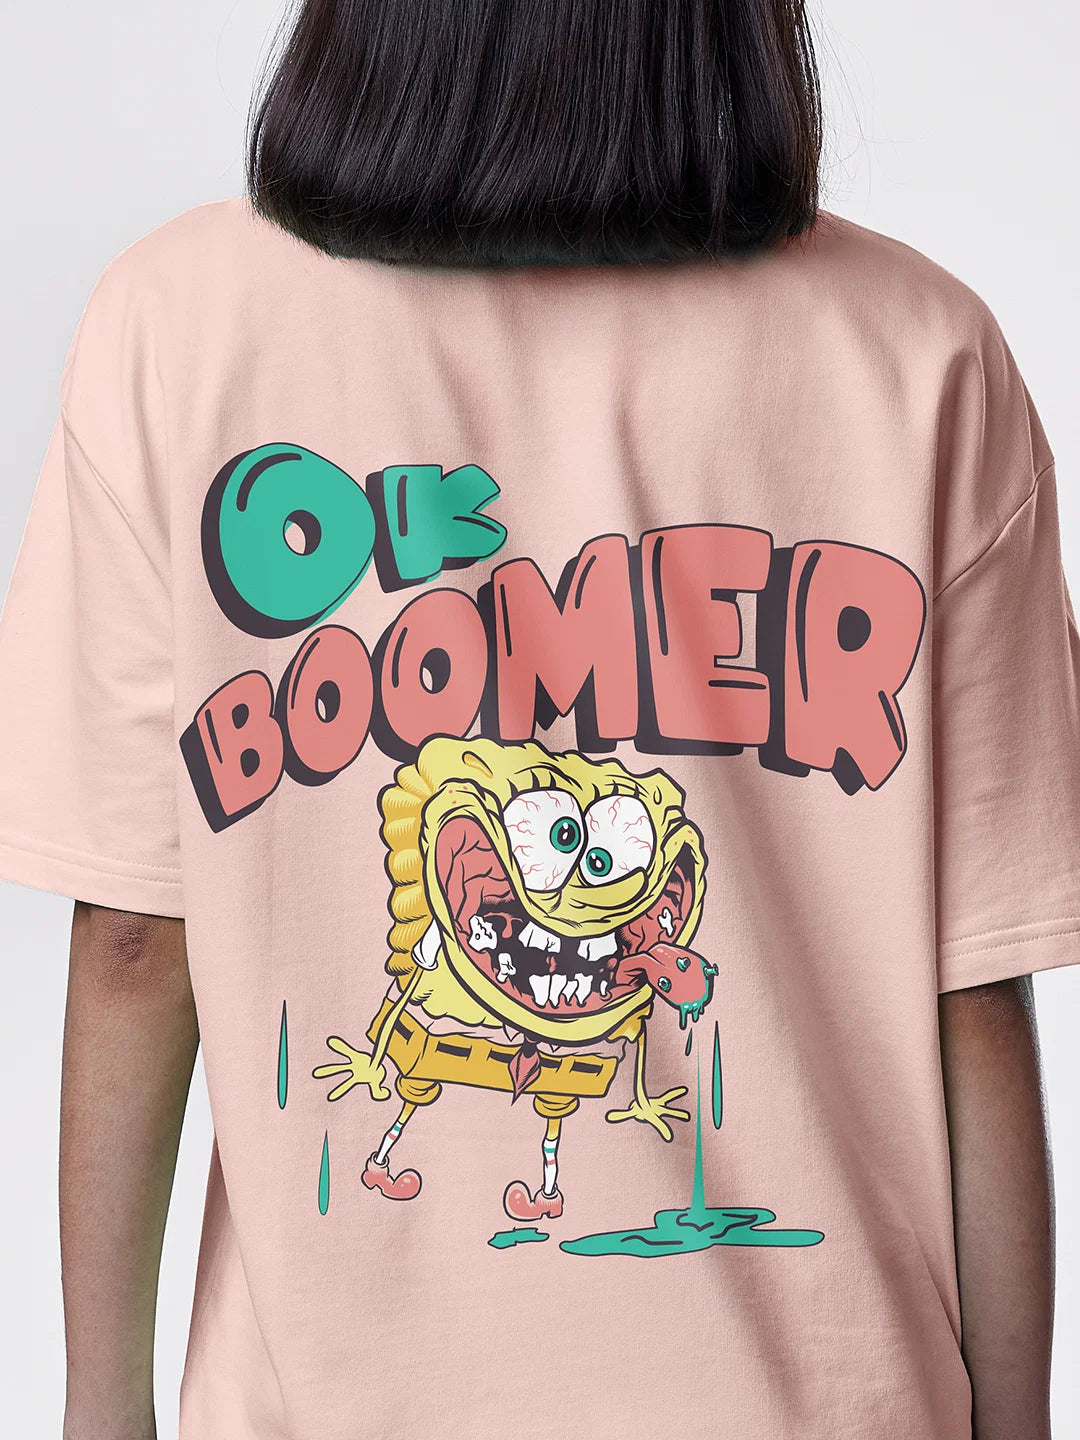 SpongeBob Ok Boomer (UK version)